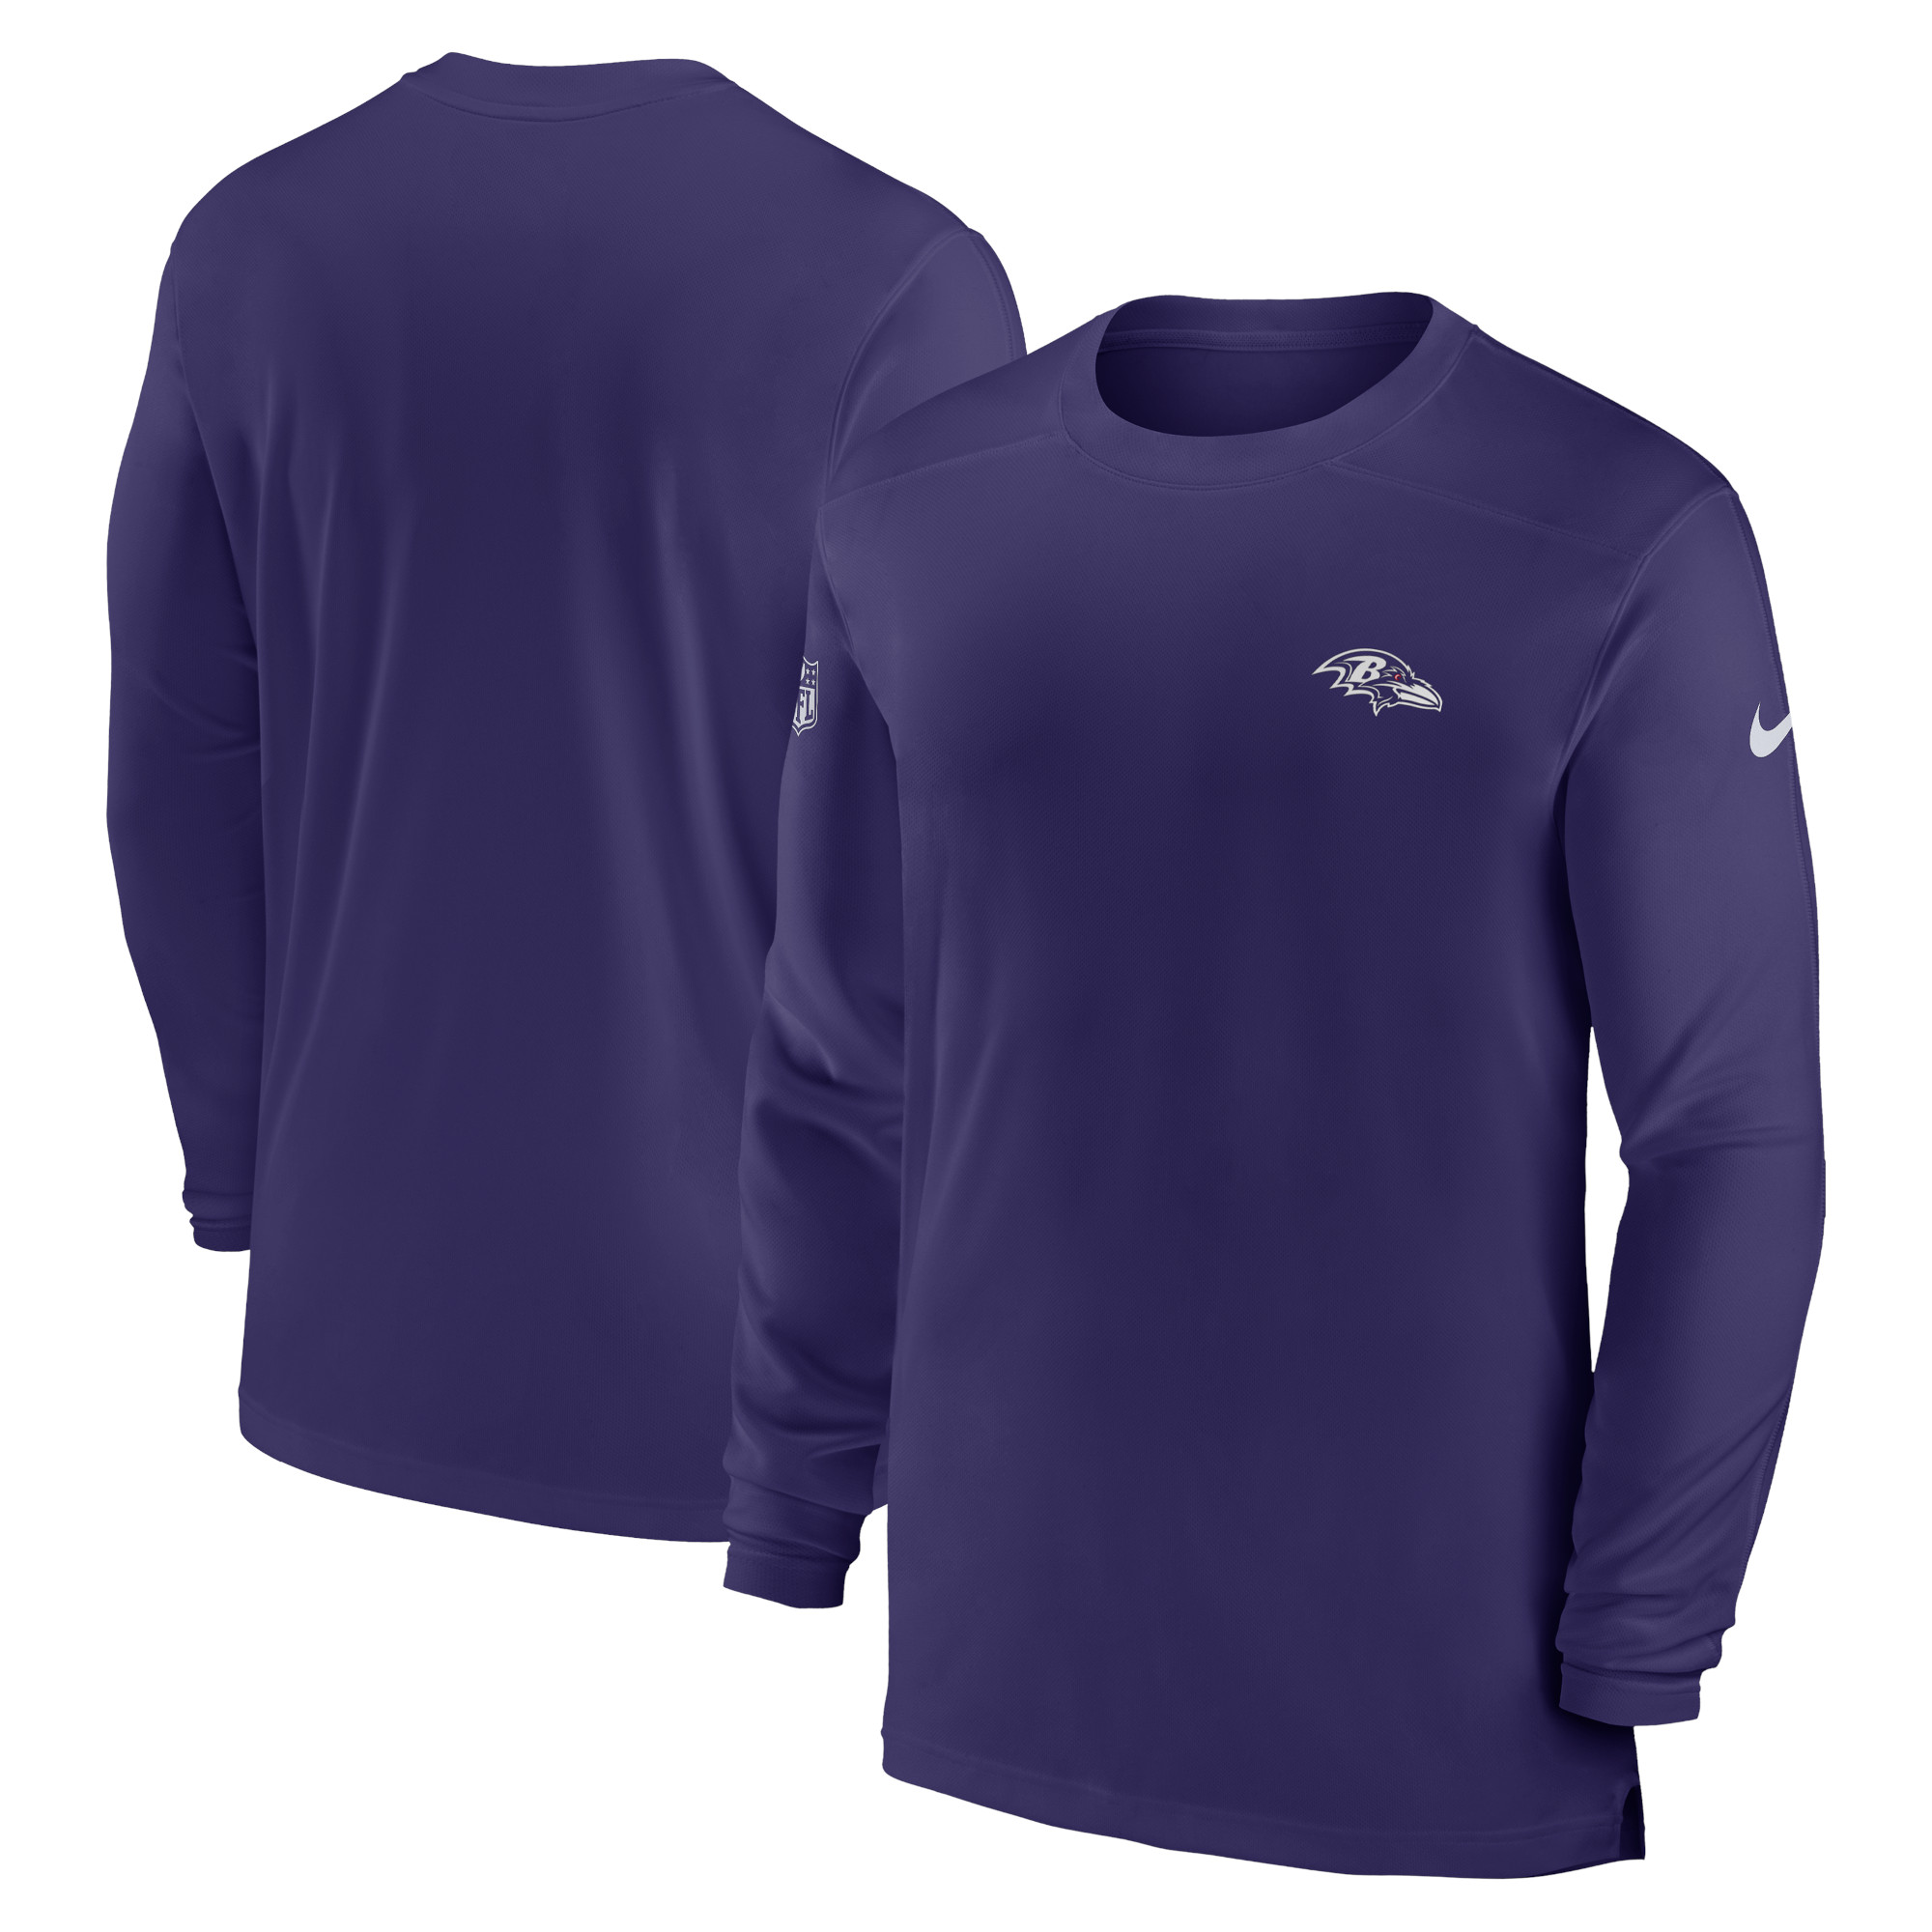 Nike Herren – Baltimore Ravens Sideline Coach Performance – Langarm-T-Shirt, lila